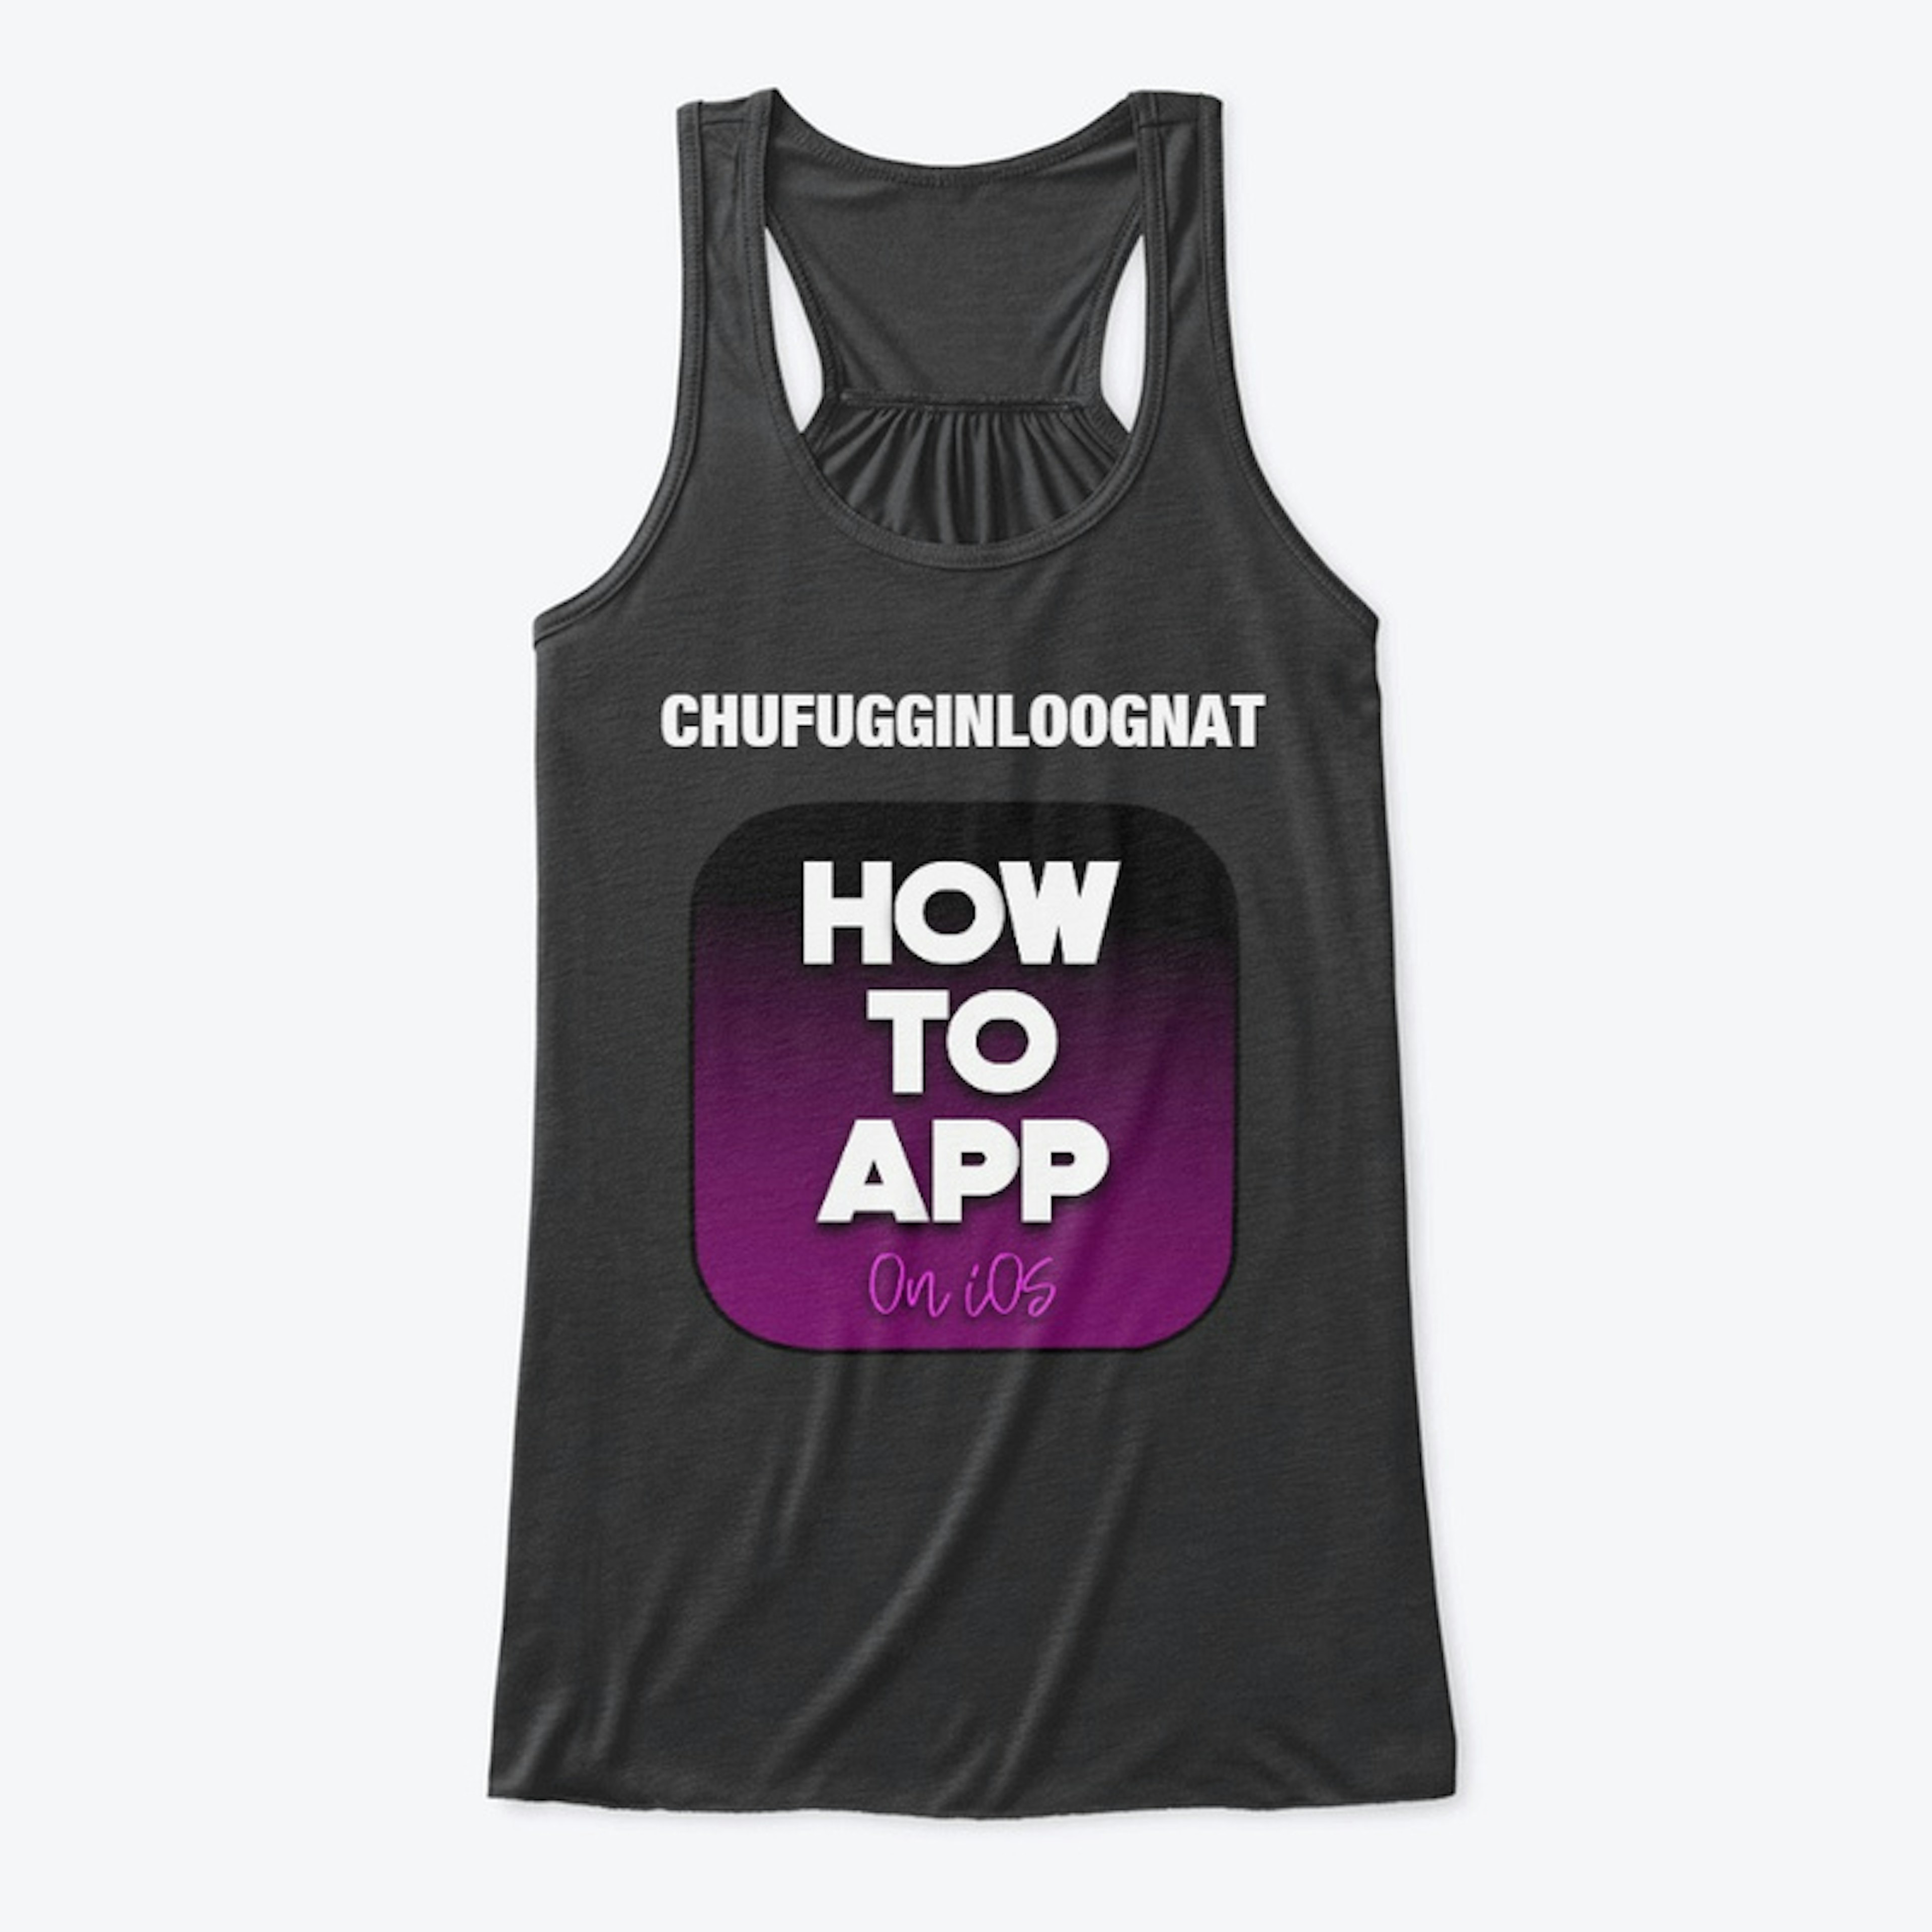 Chufugginloognat How to App Shirt